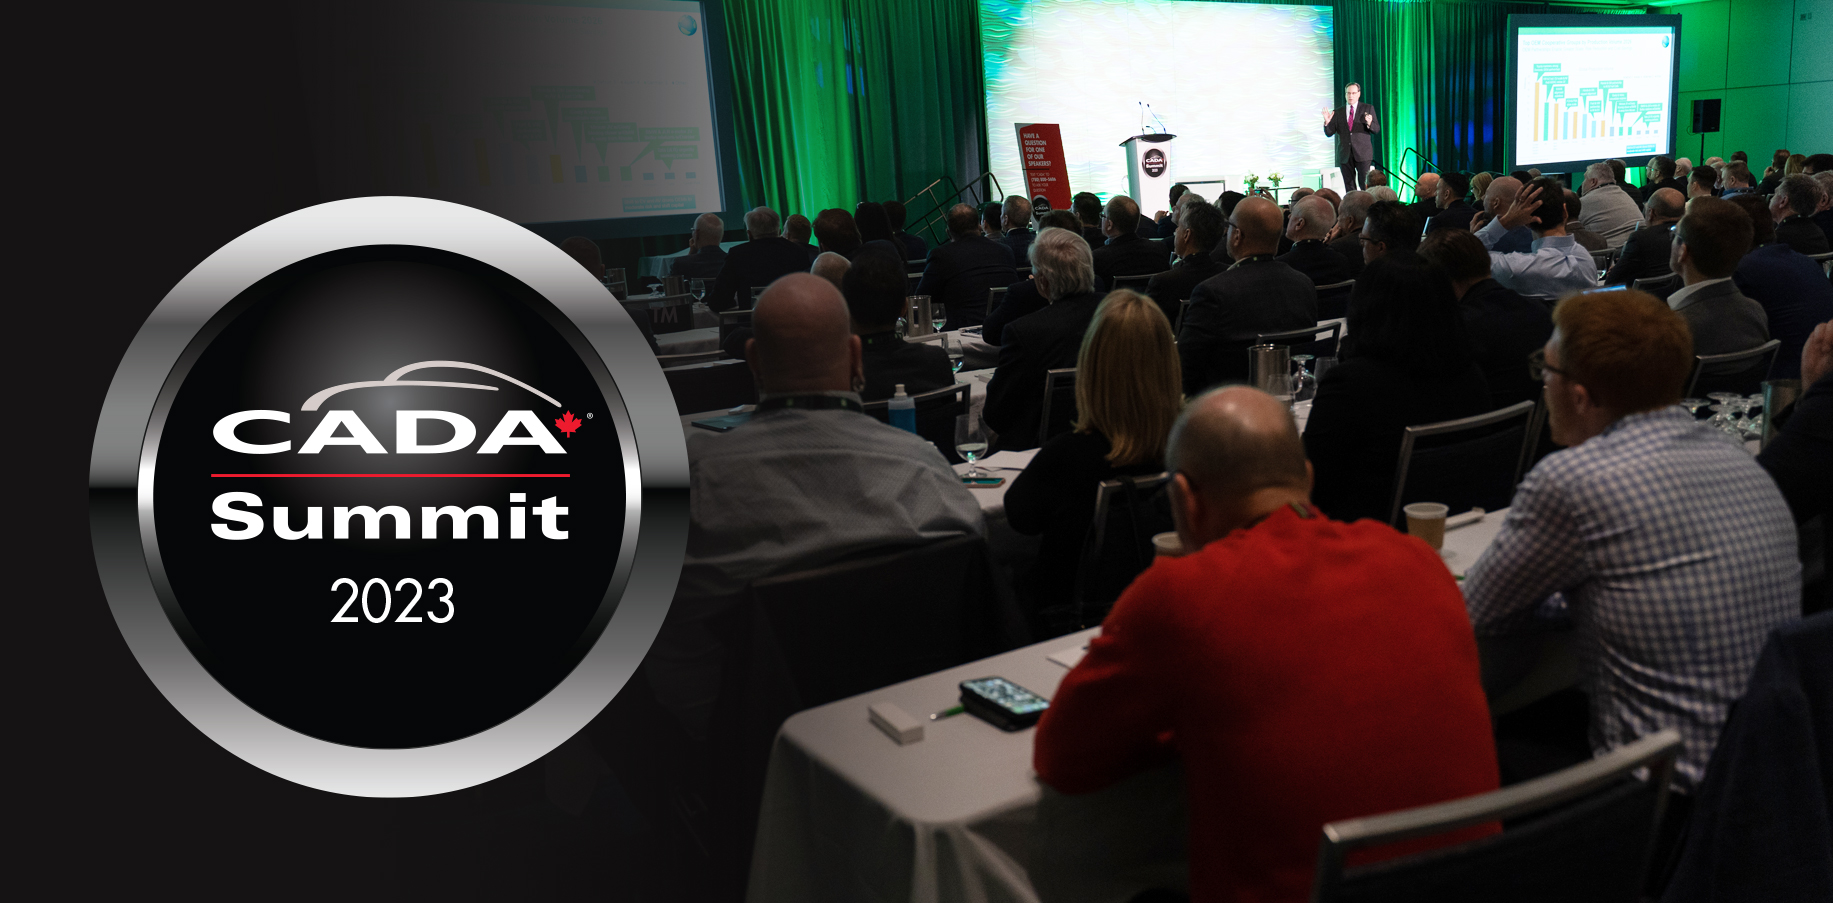 Only three weeks until CADA Summit 2023: Register now!